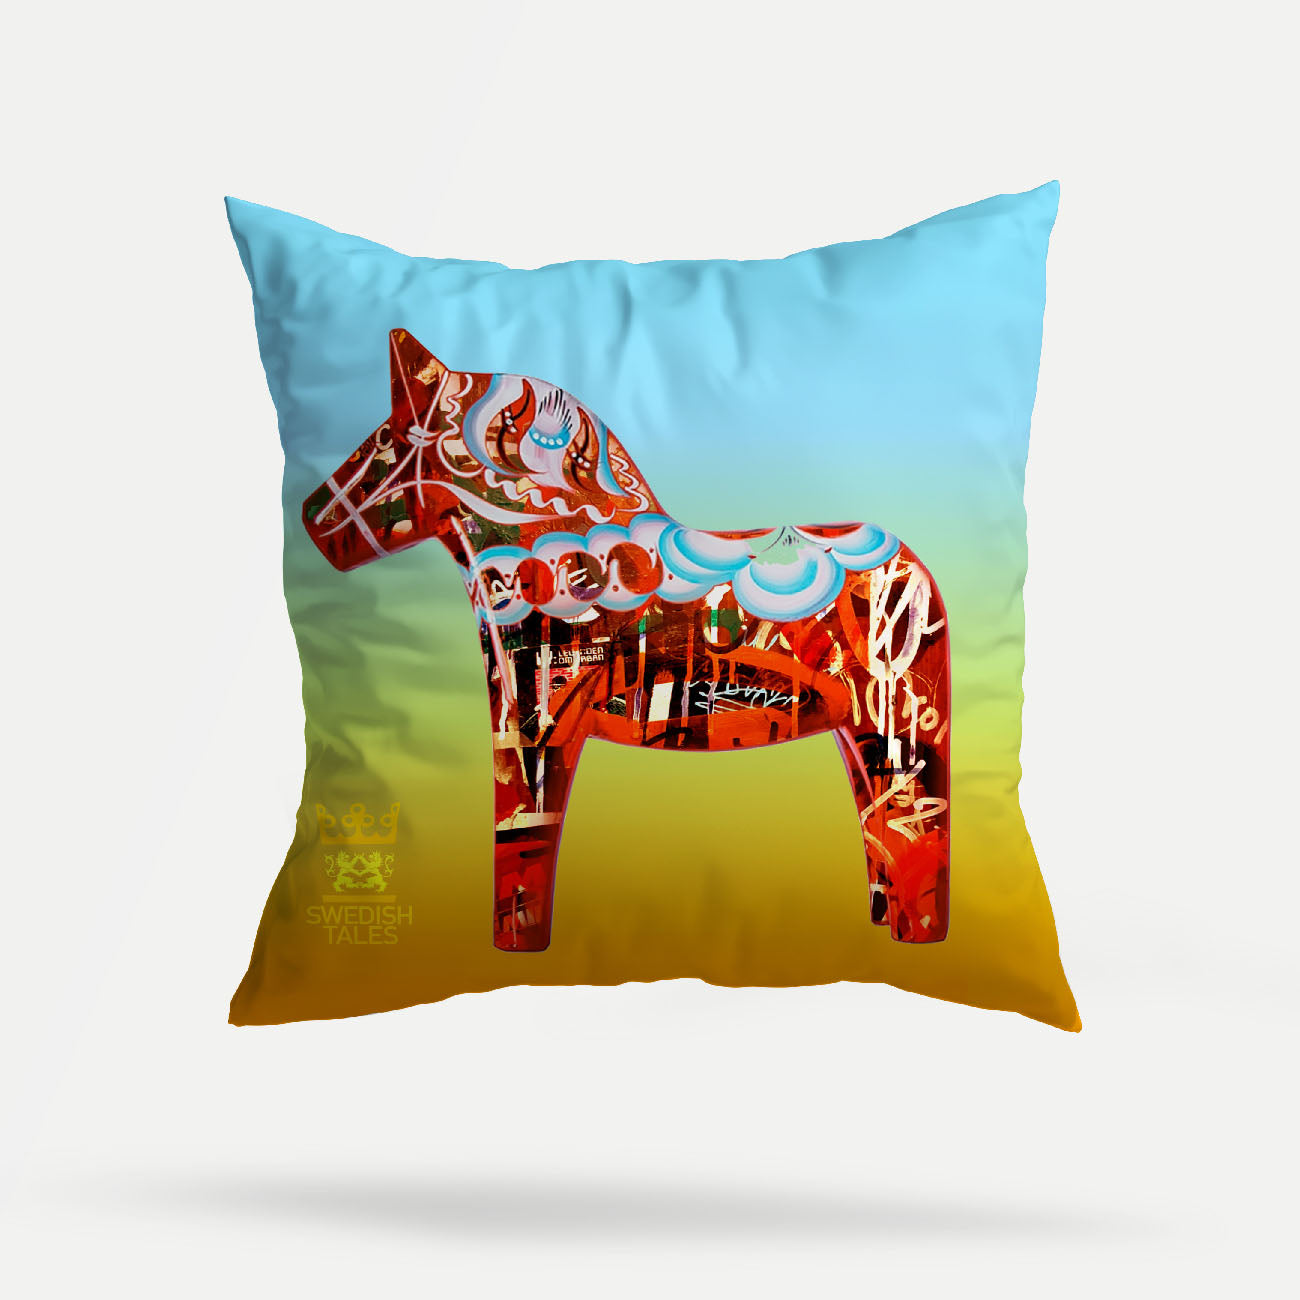 Made in Sweden, Dala horse swedish design pillow